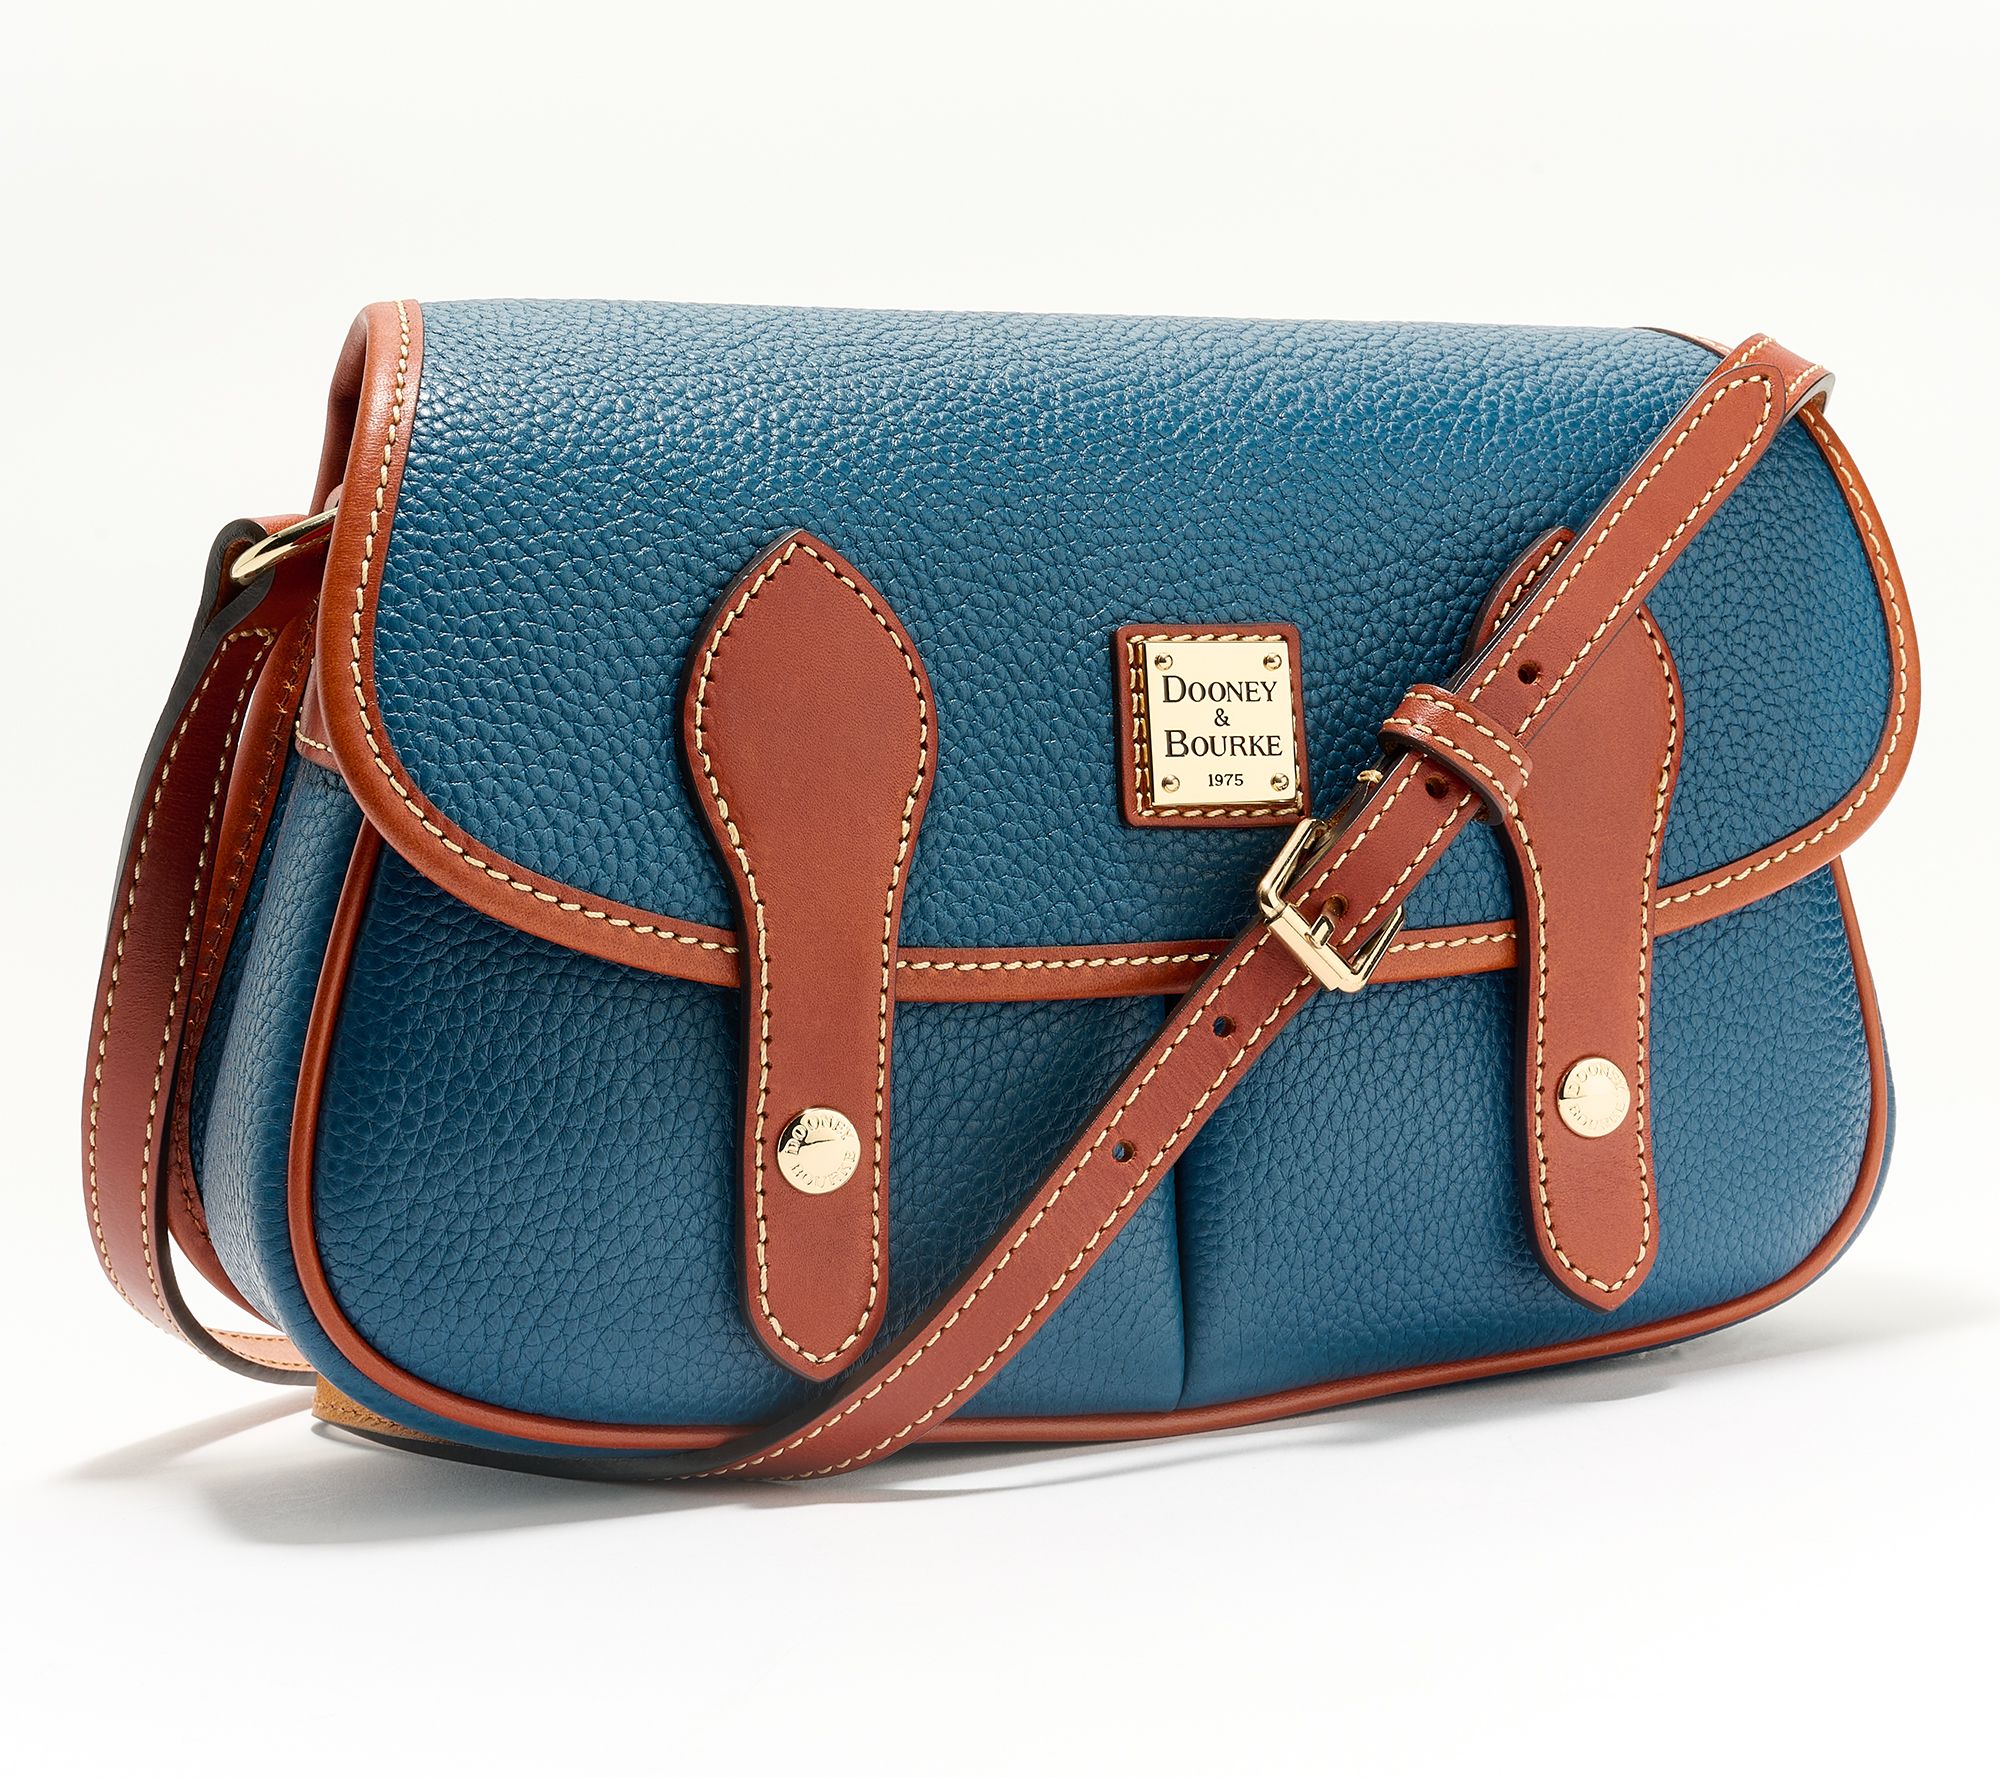 Dooney & Bourke Pebble Leather Ellie Crossbody Bag